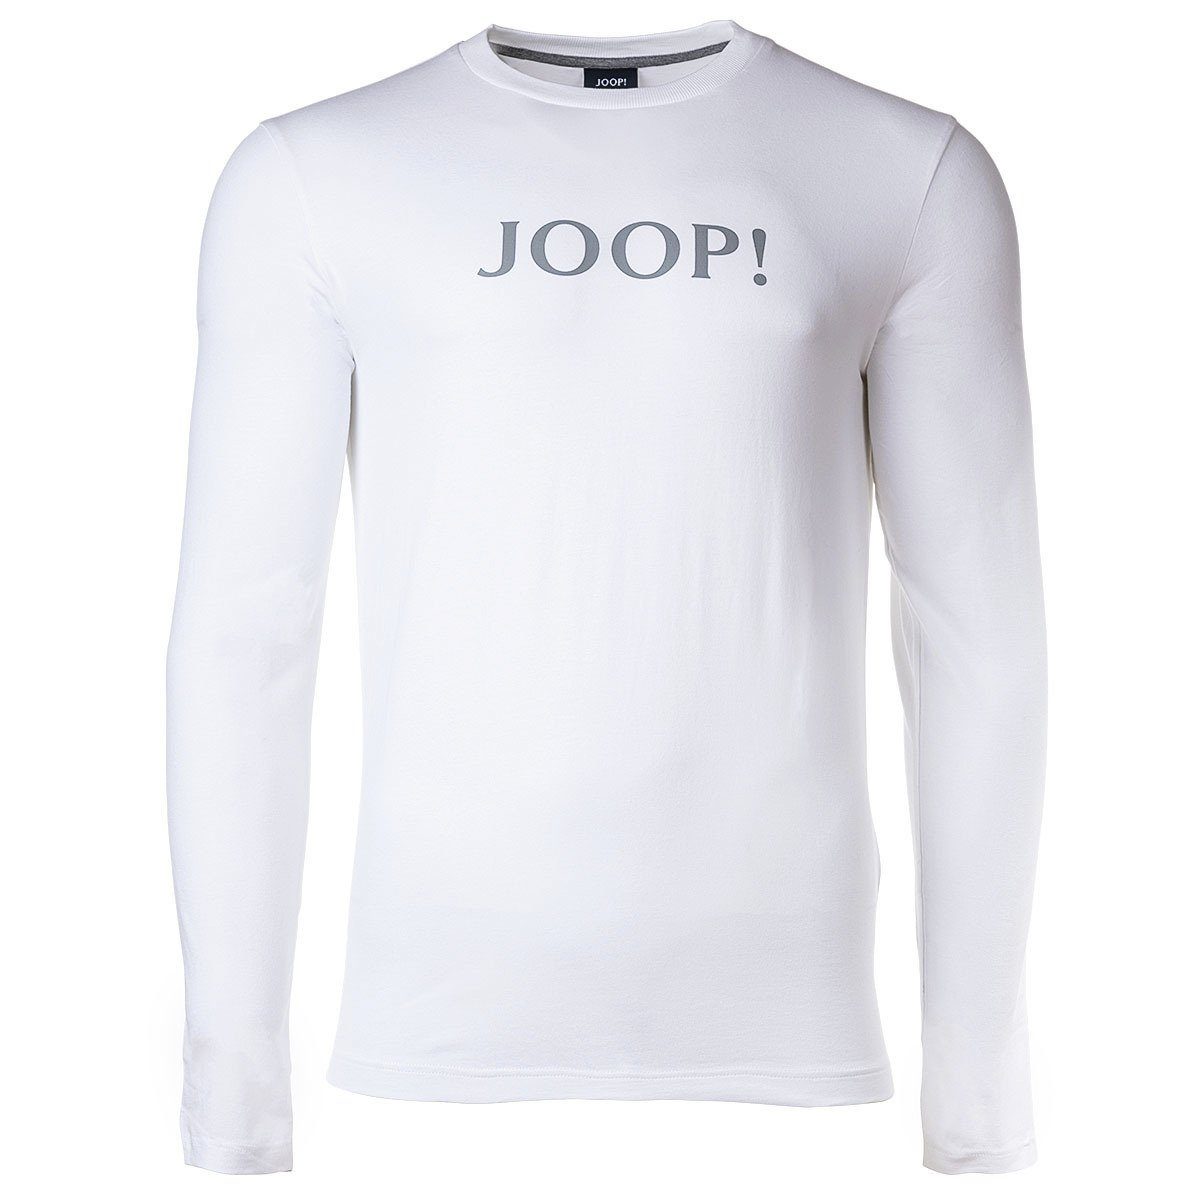 Langarm-Shirt Joop! - Rundhals Herren T-Shirt Weiß Loungewear,